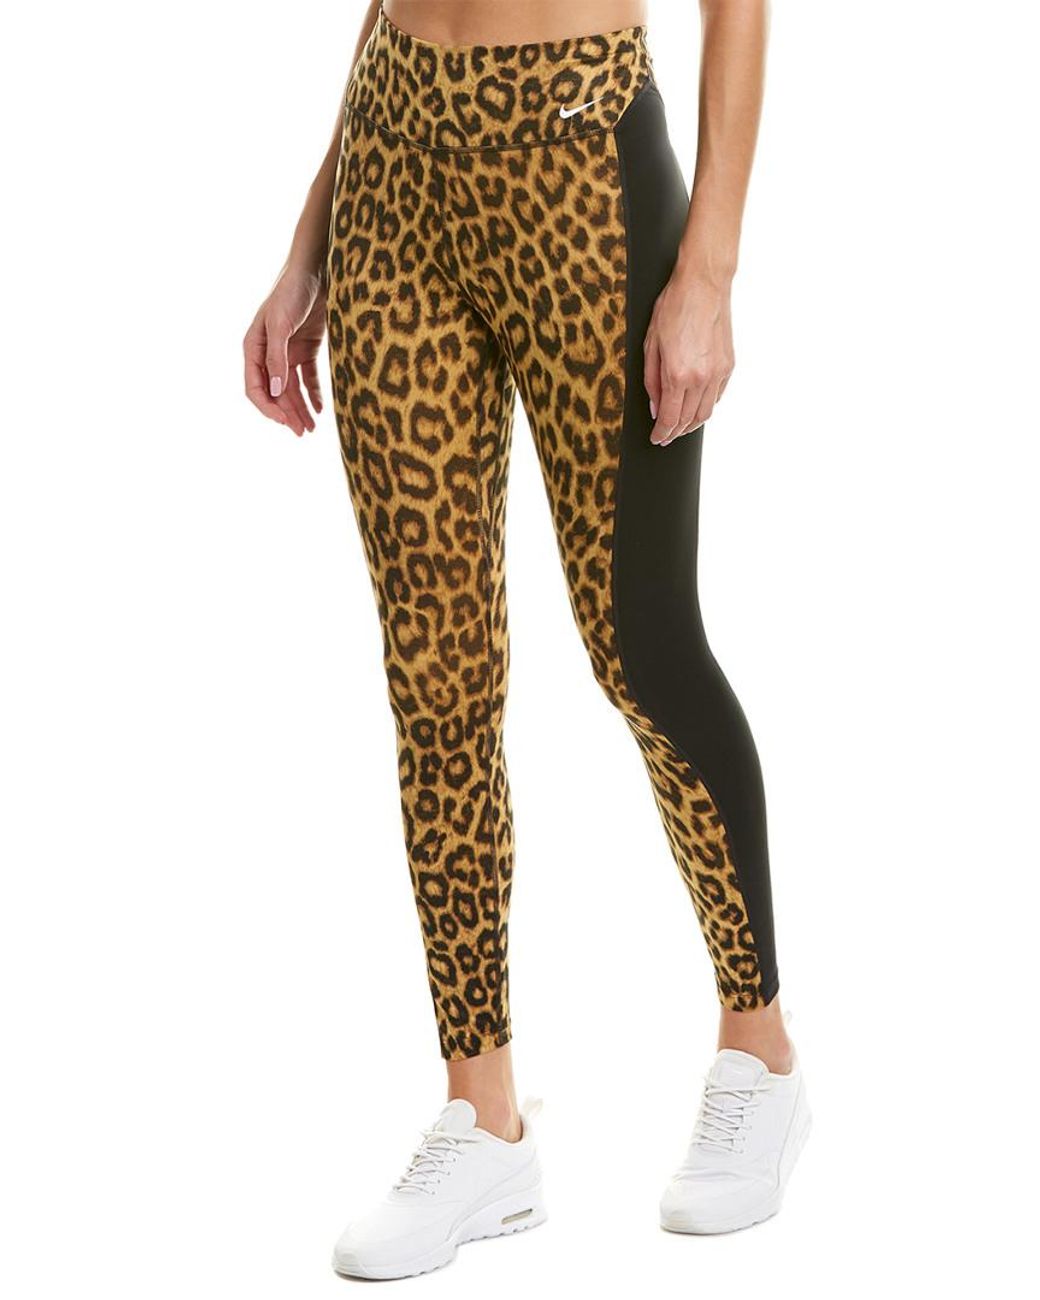 Nike One Leopard Print Leggings in Black | Lyst Canada